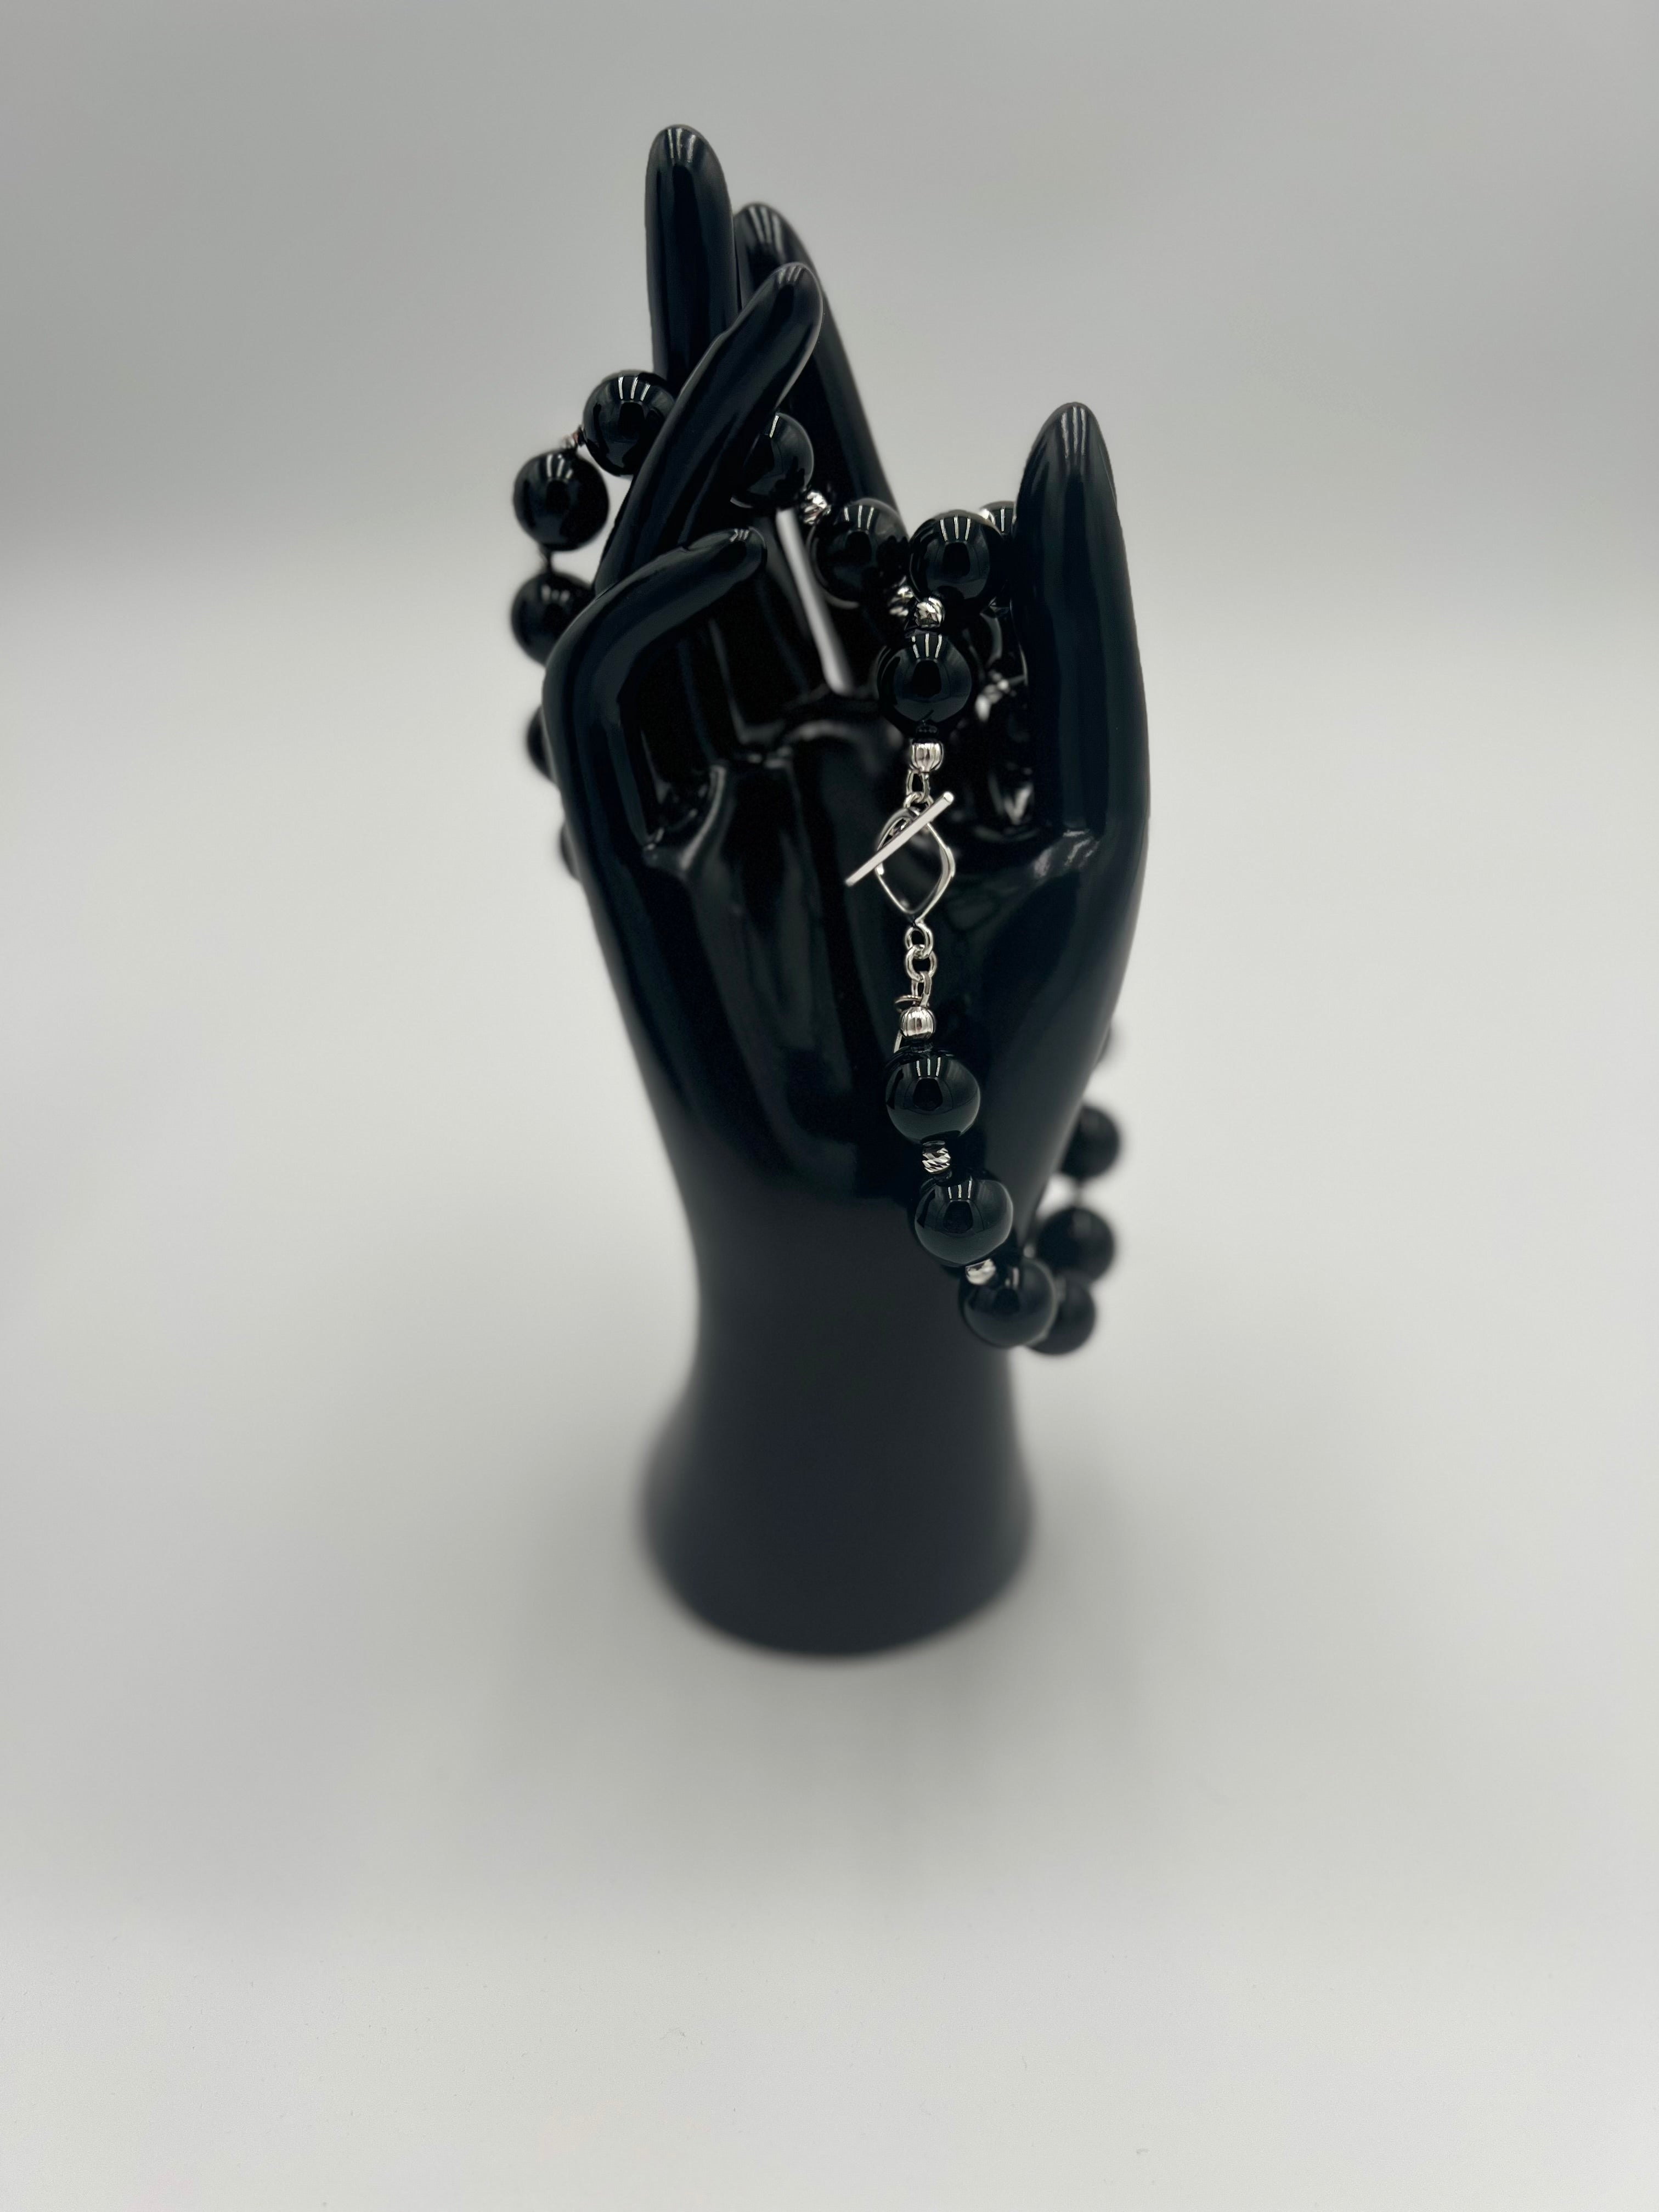 Black Onyx & Italian Silver Necklace 19"